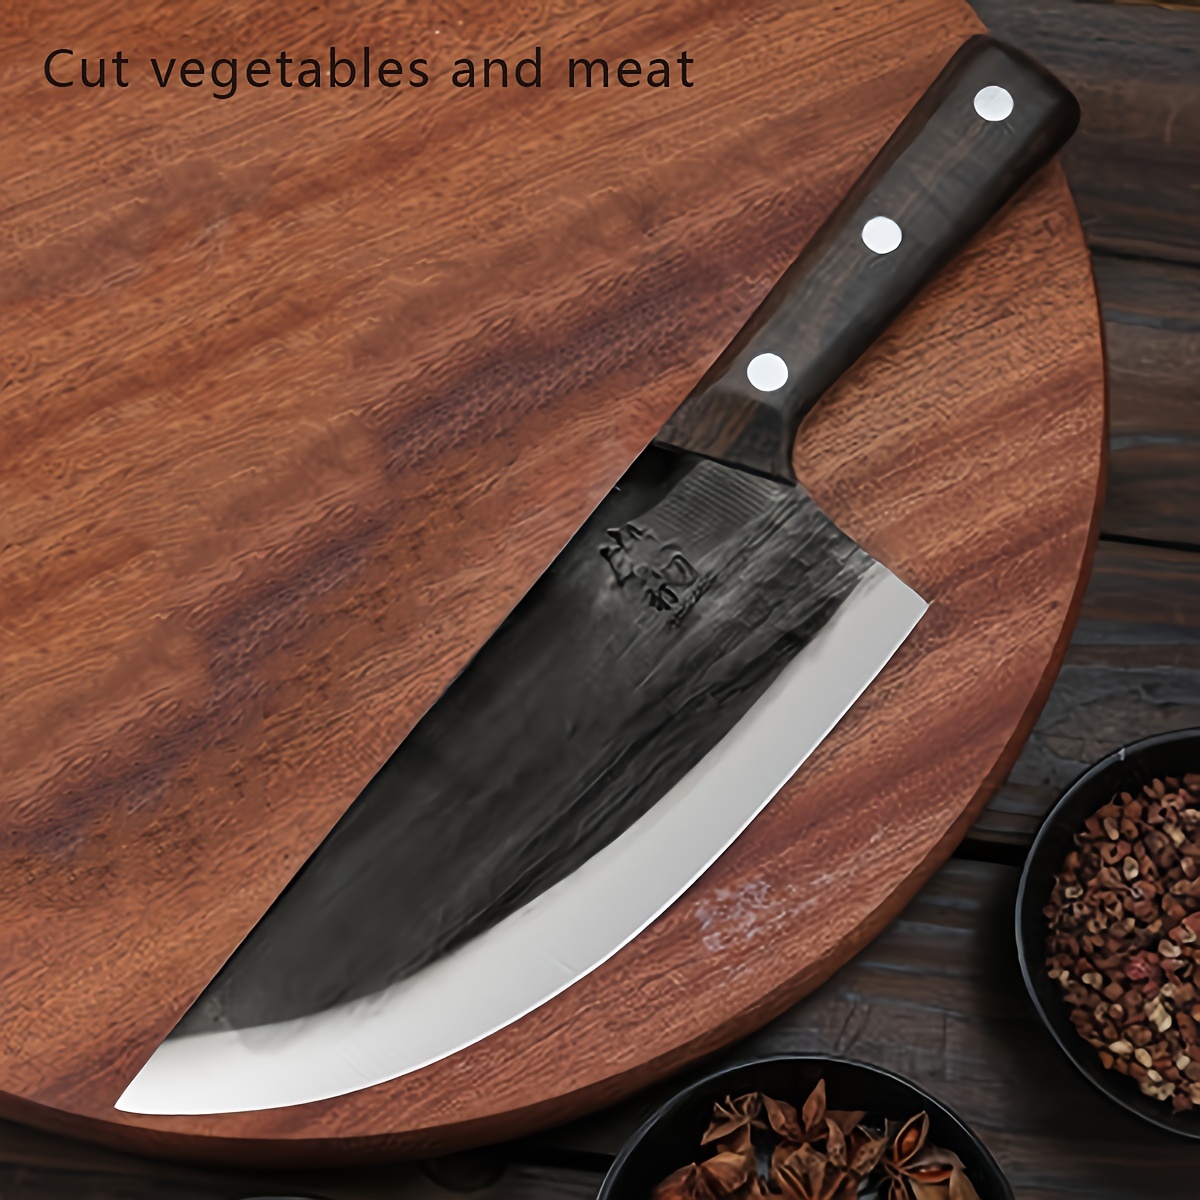 Huusk Cuchillo japonés pequeño cuchillo de carne con cuchillo de carnicero  resistente con funda para el hogar, camping, barbacoa : Hogar y Cocina 